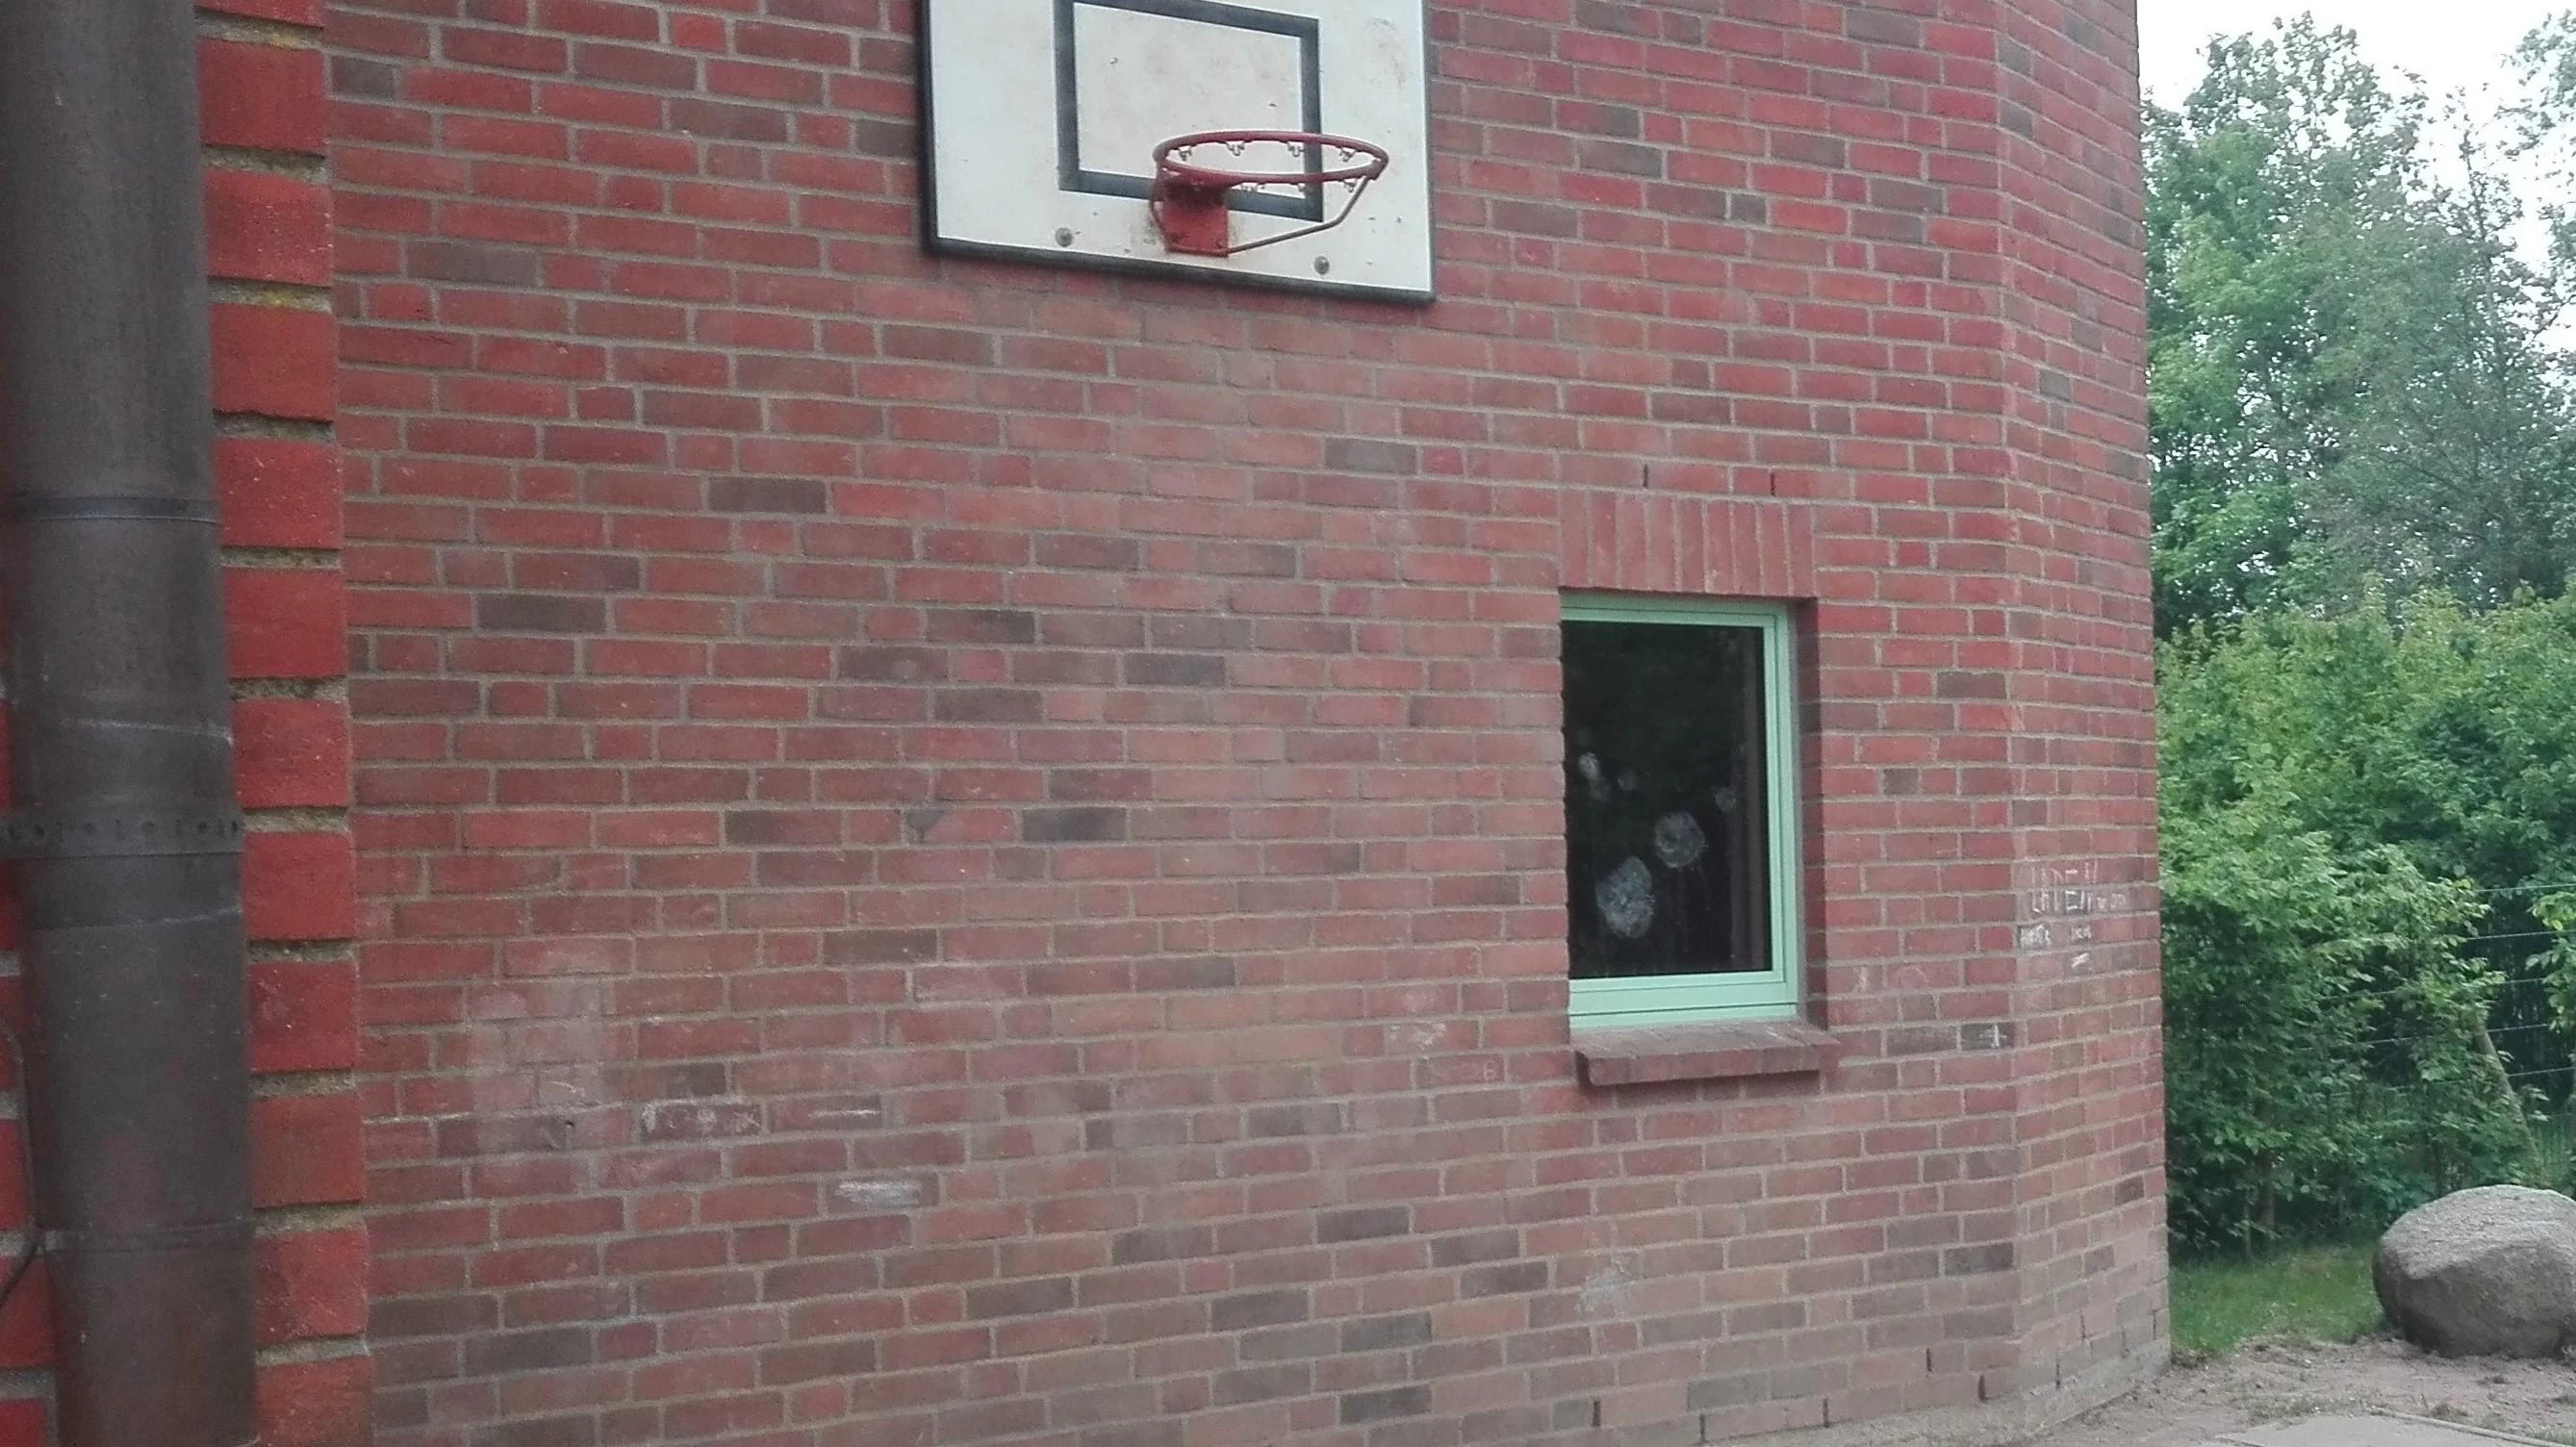 Kiel Basketball Court: Korb an der Waldorfschule Kiel – Courts of the World